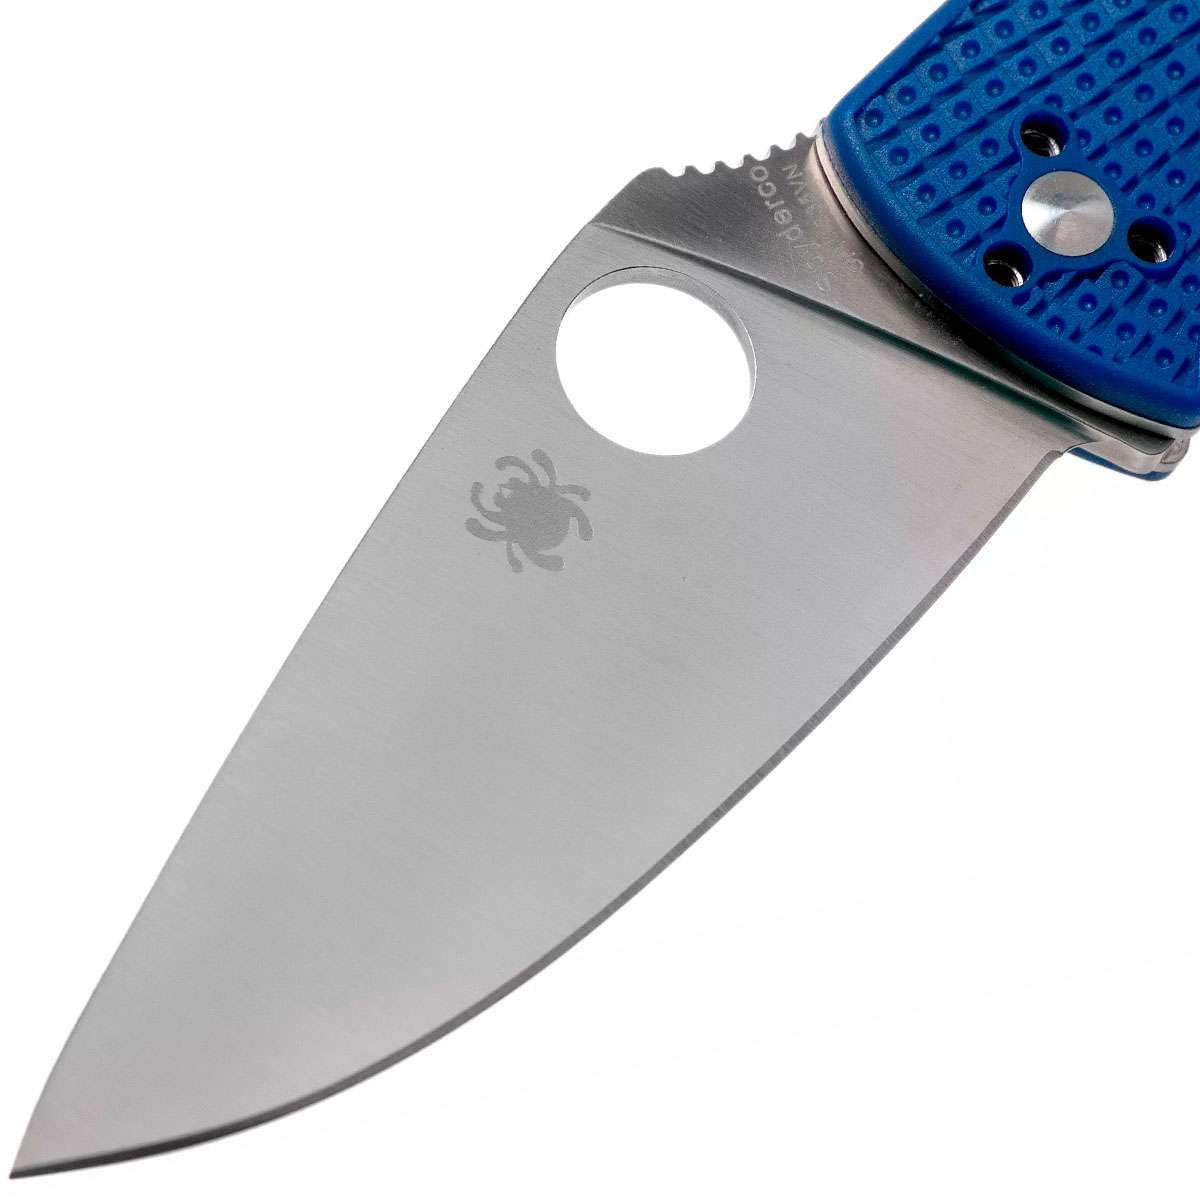 Spyderco Tenacious Lightweight S35VN Liner Lock Pocket Knife C122PBL - Blue